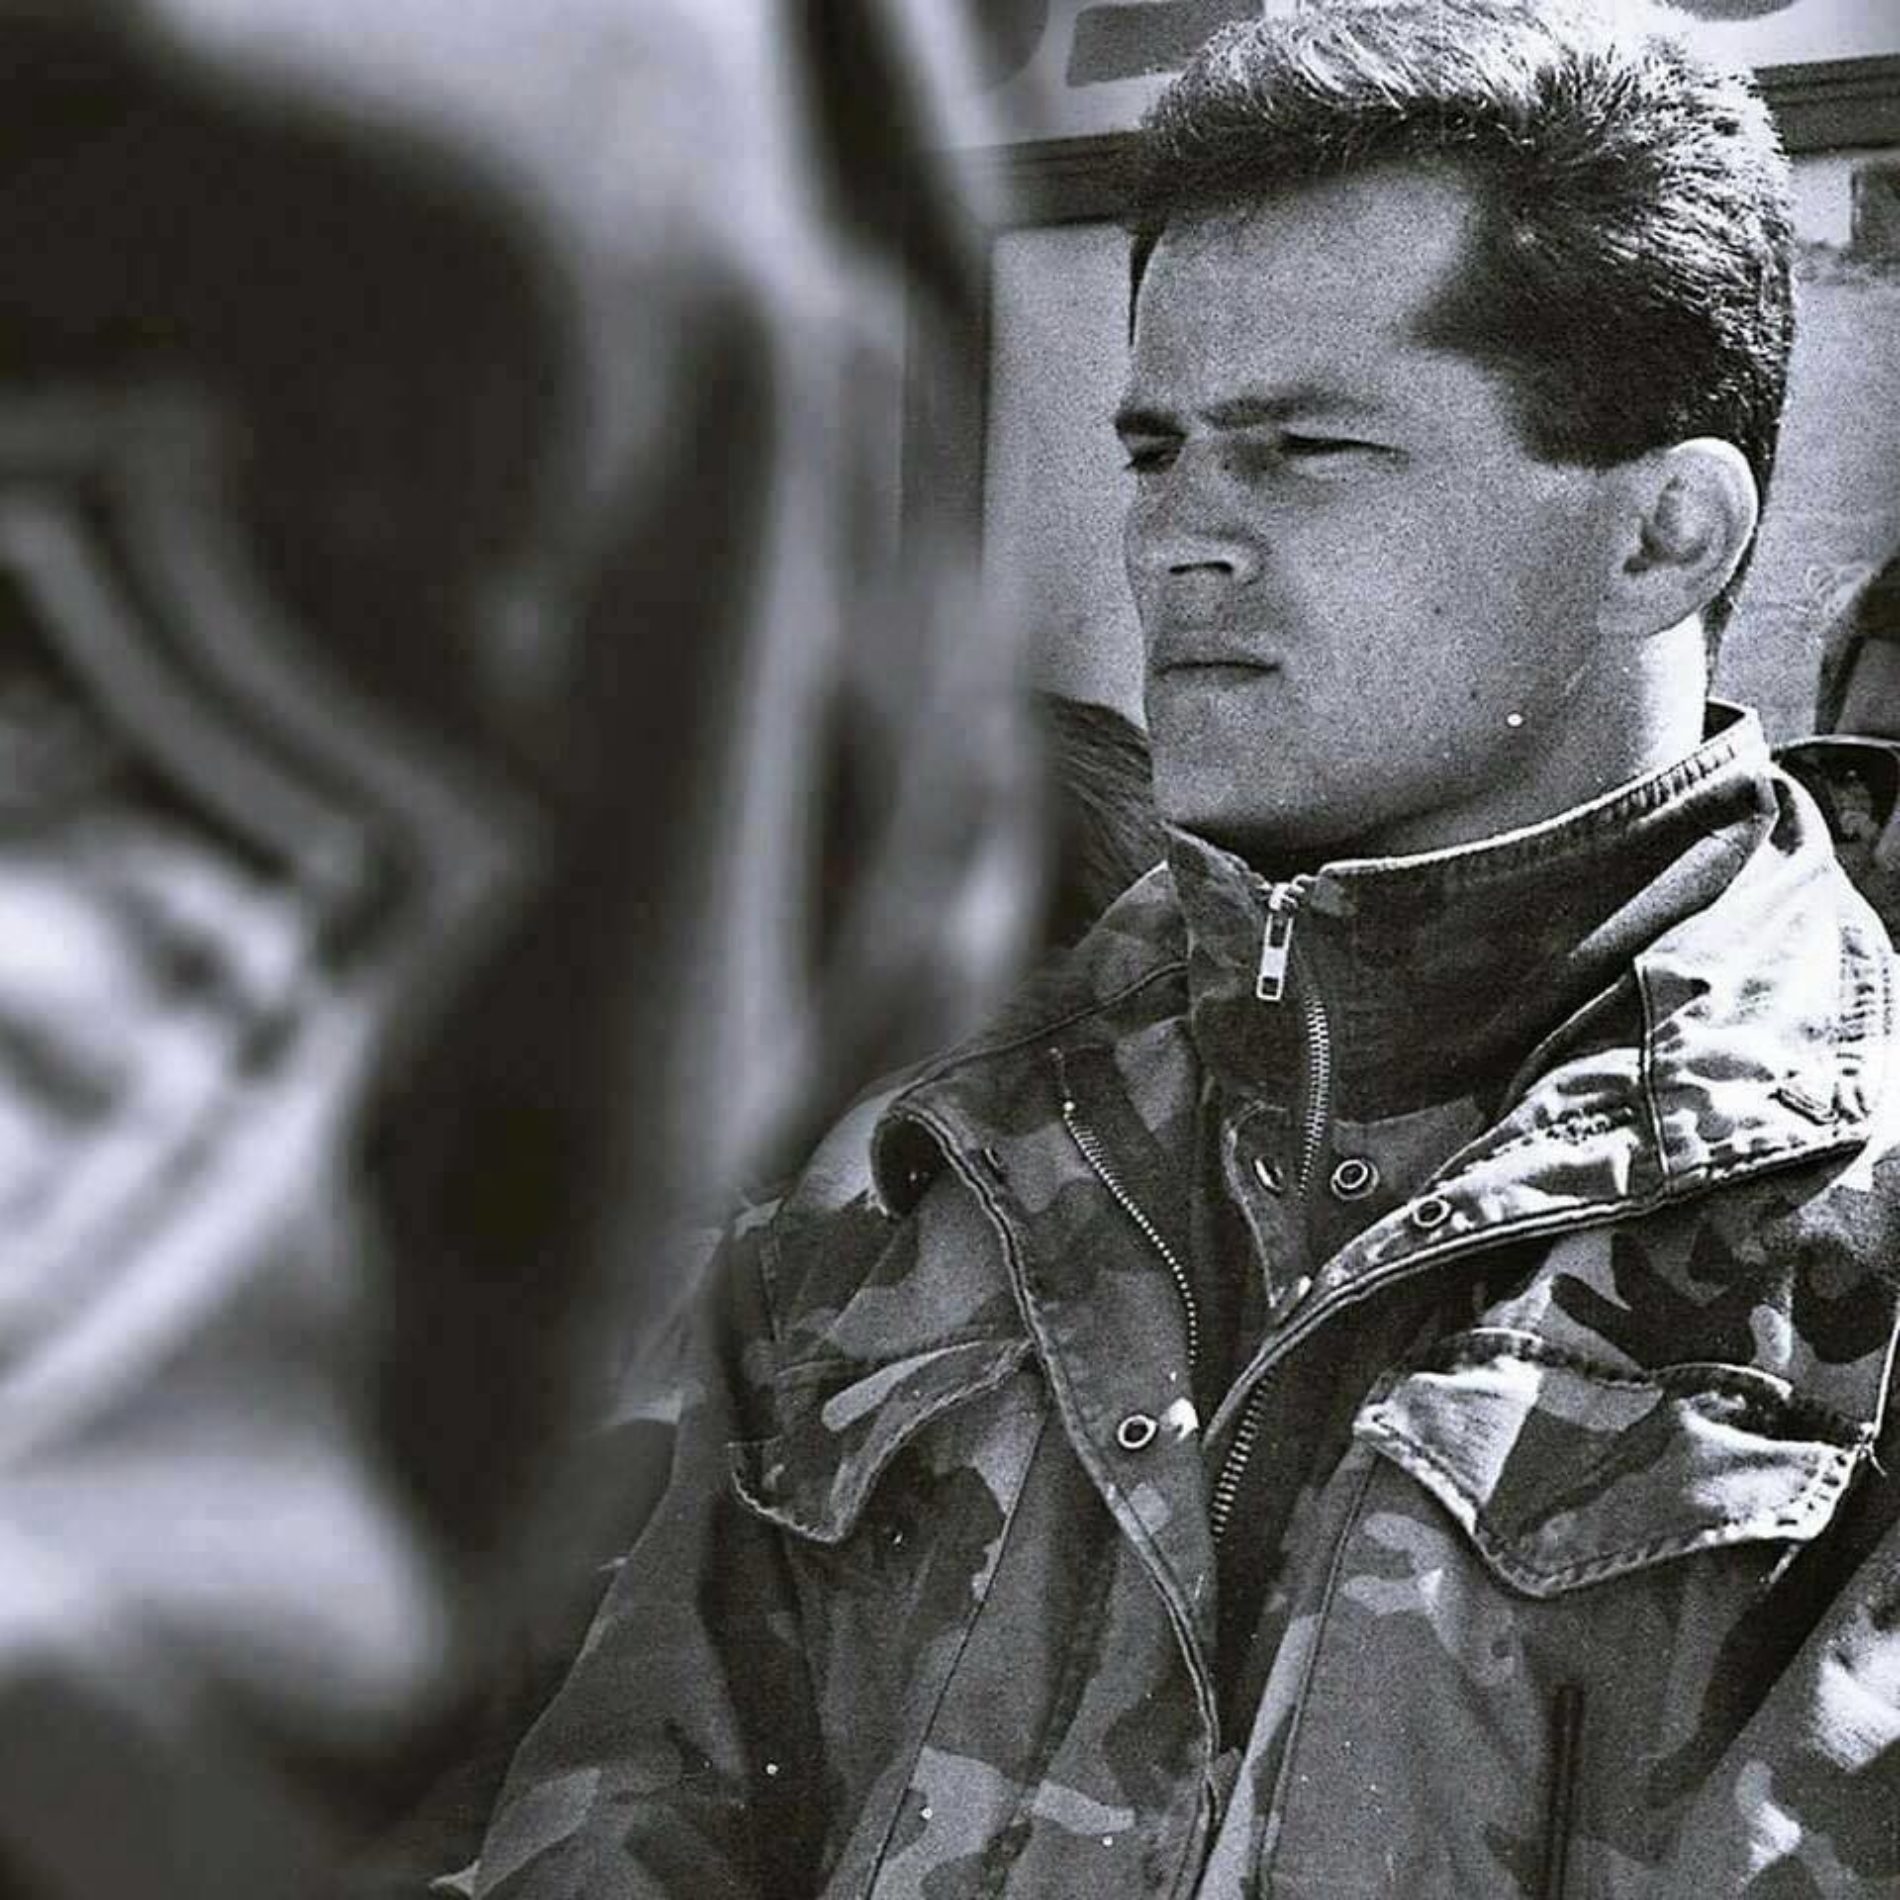 Godišnjica agresorske operacije ‘Breza 94’ – Otpor Nanićevih Krajišnika i ranjavanje Mladića (Video)